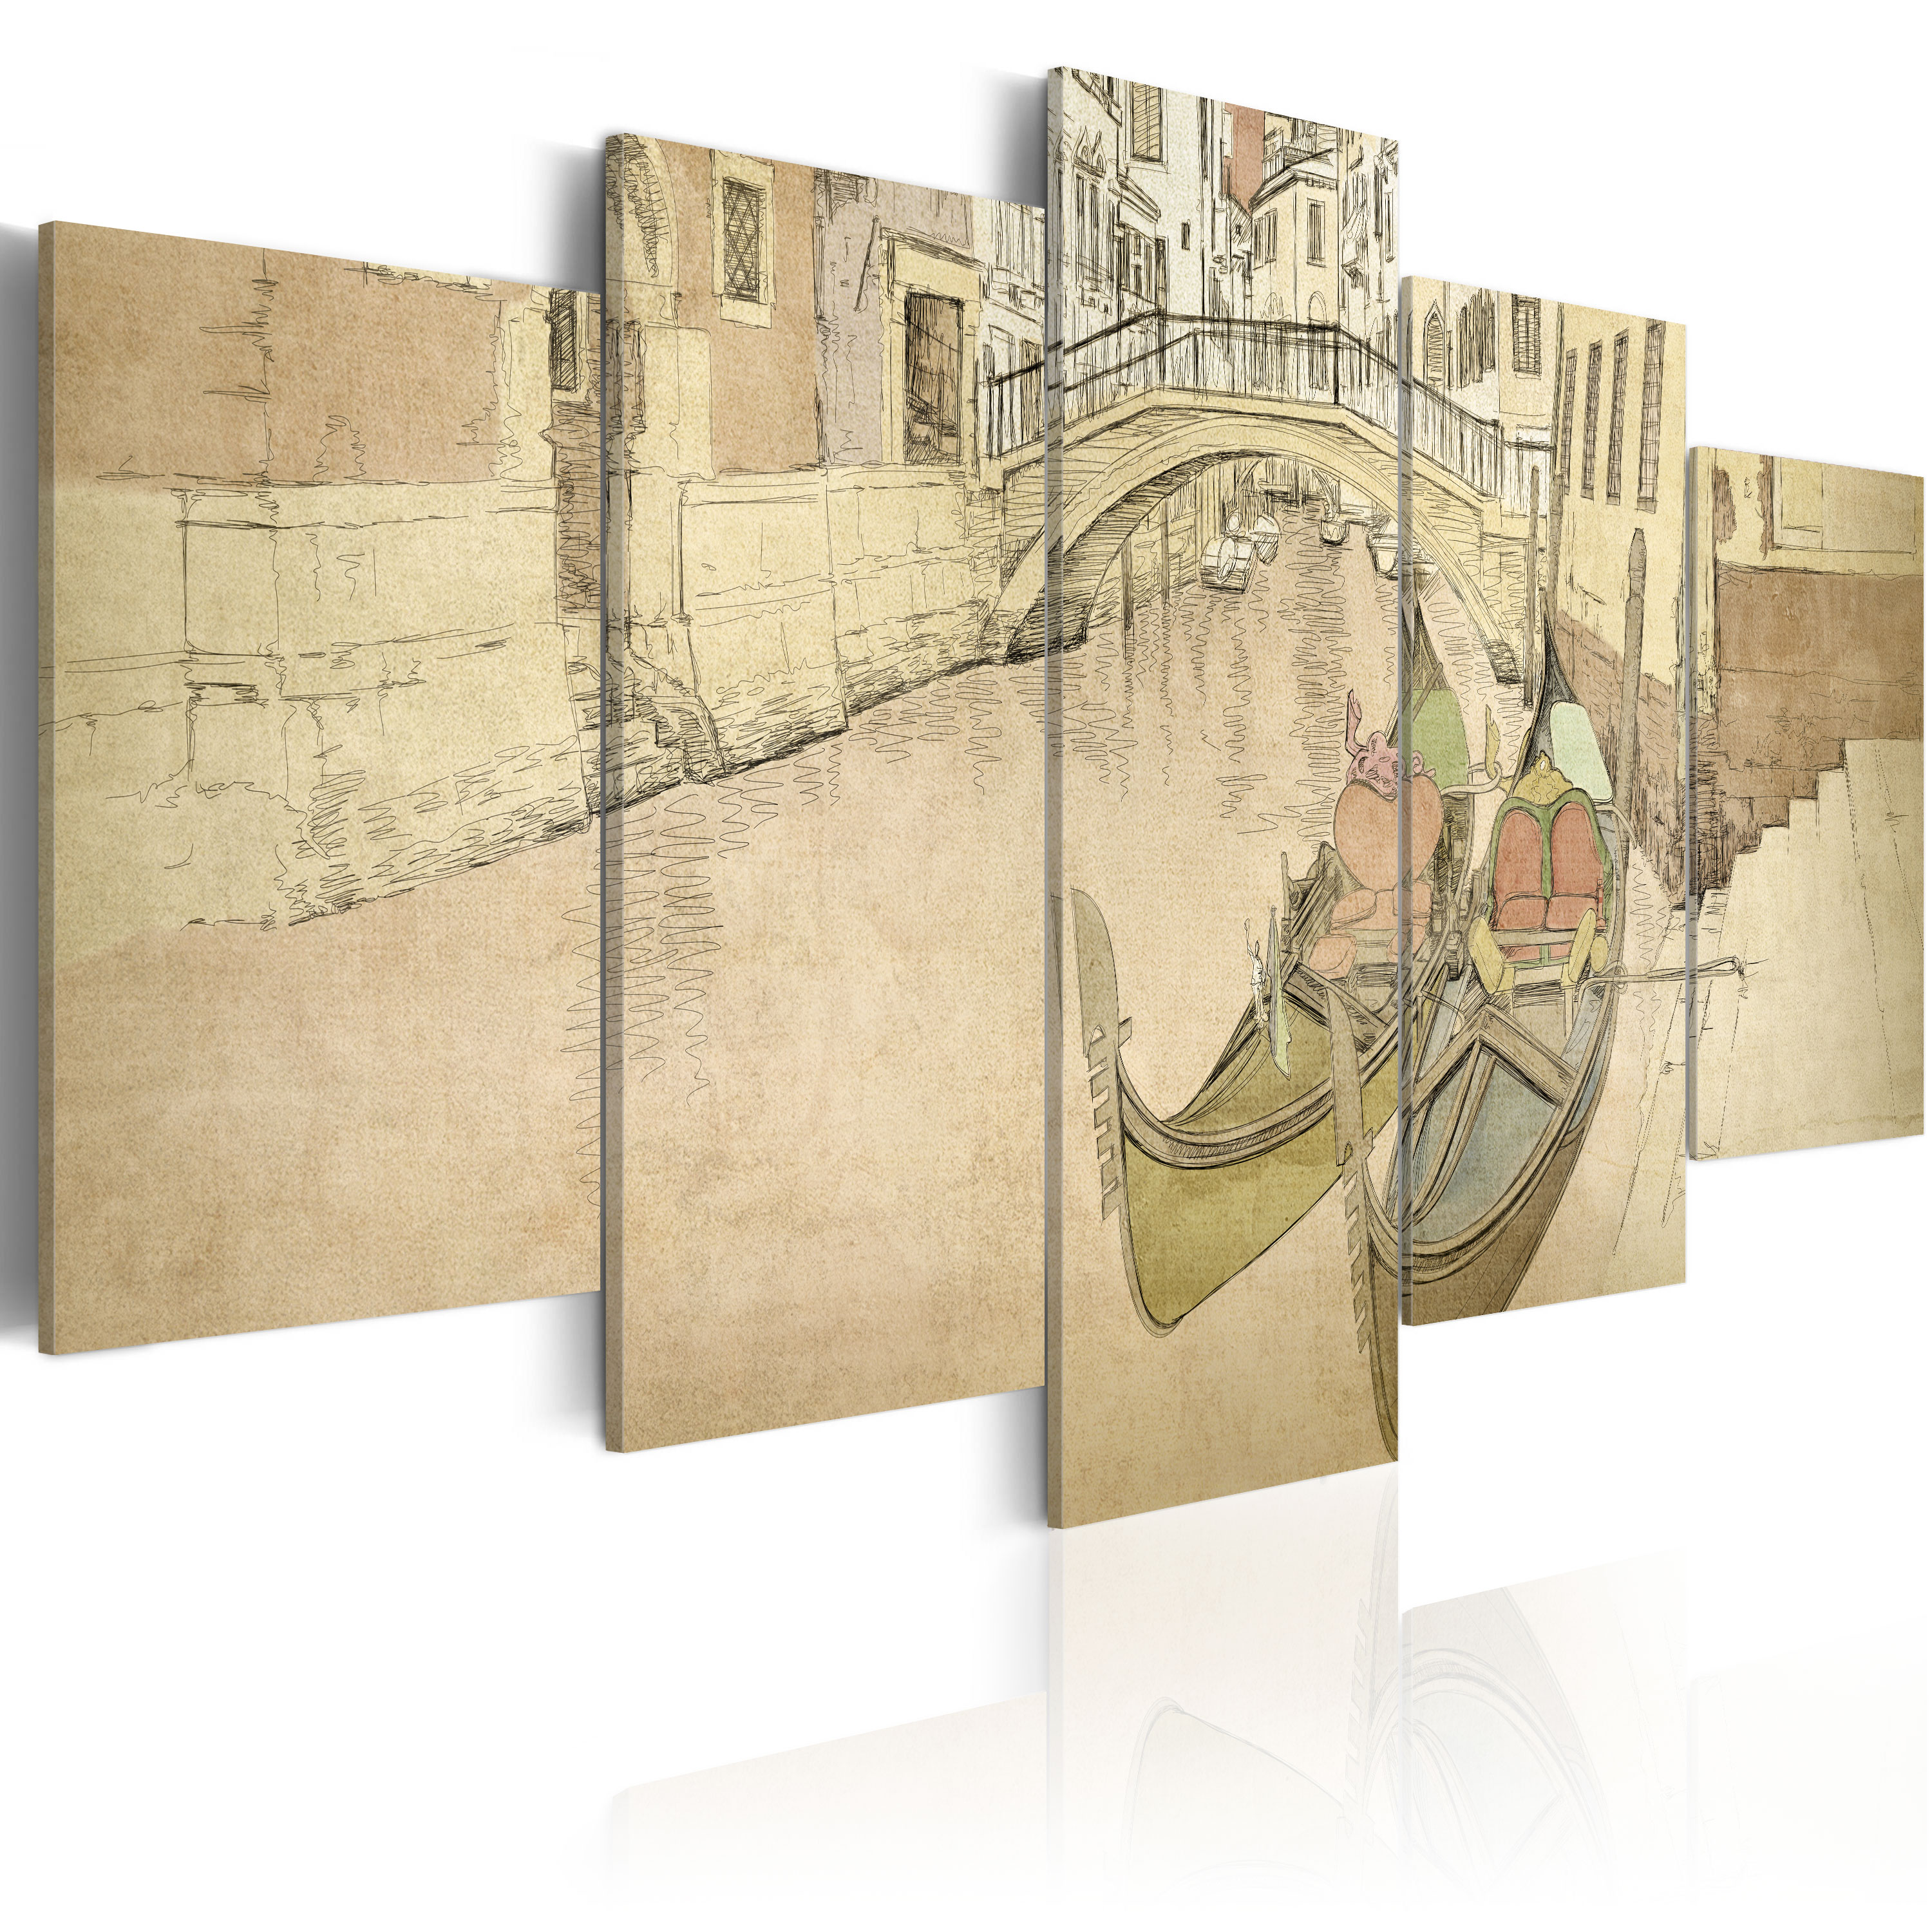 ARTGEIST - Kunstnerisk tegnet billede fra kanalerne i Venedig trykt på lærred - Flere størrelser 200x100